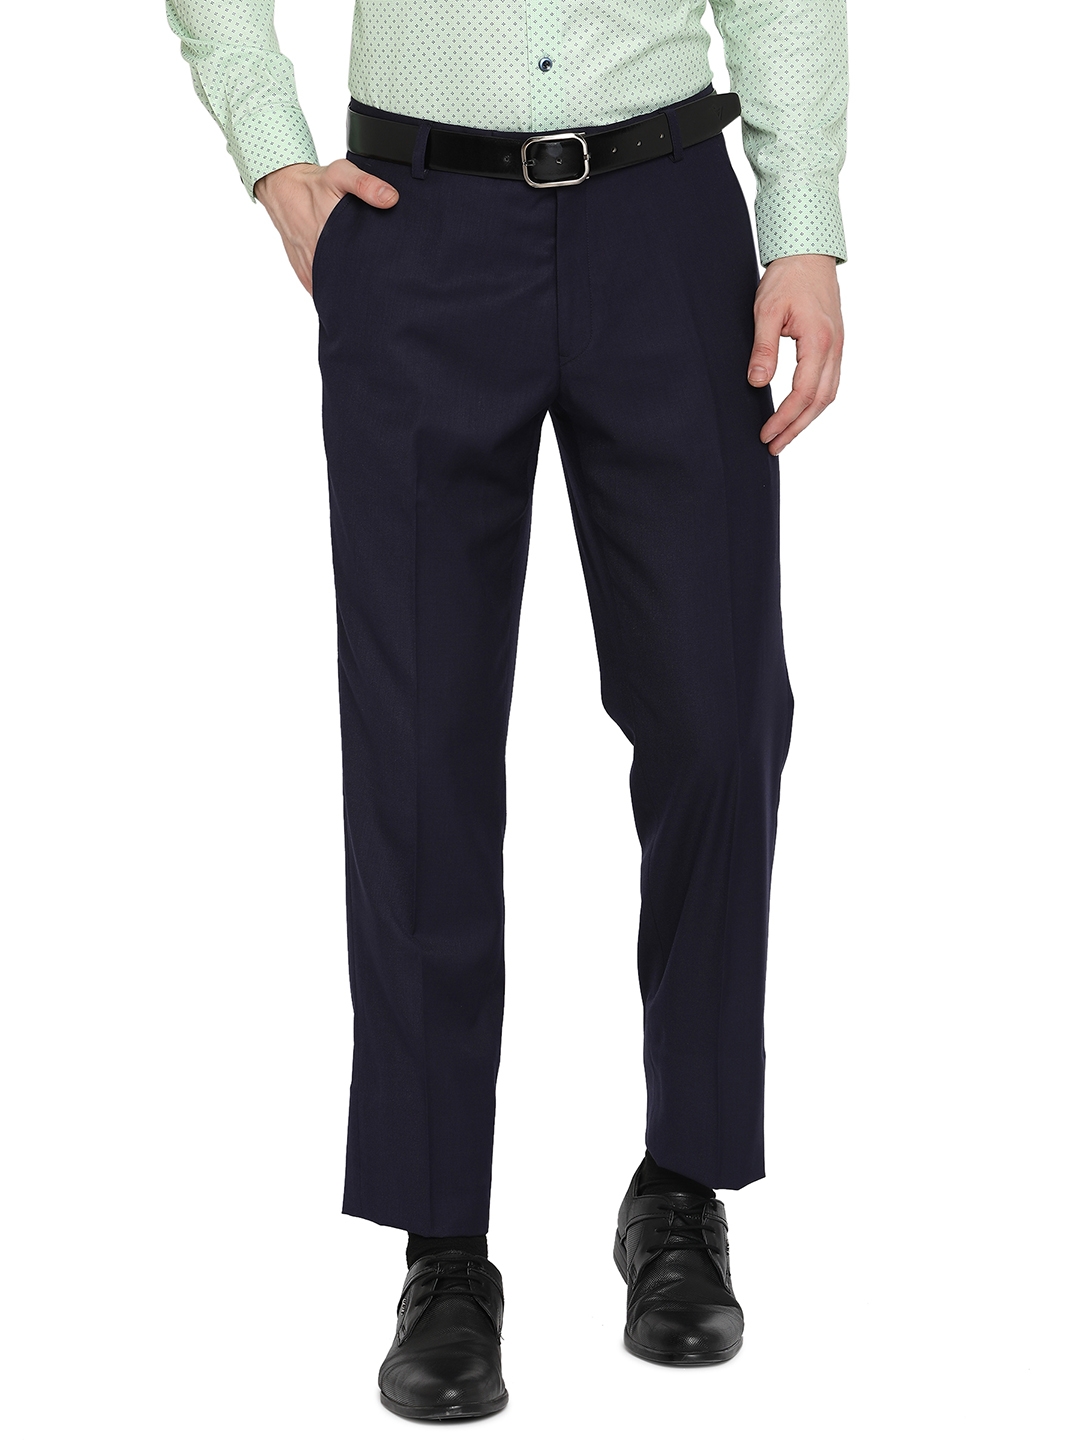 JadeBlue | Blue Solid Formal Trousers (TJBC203/3,NAVY SELF)